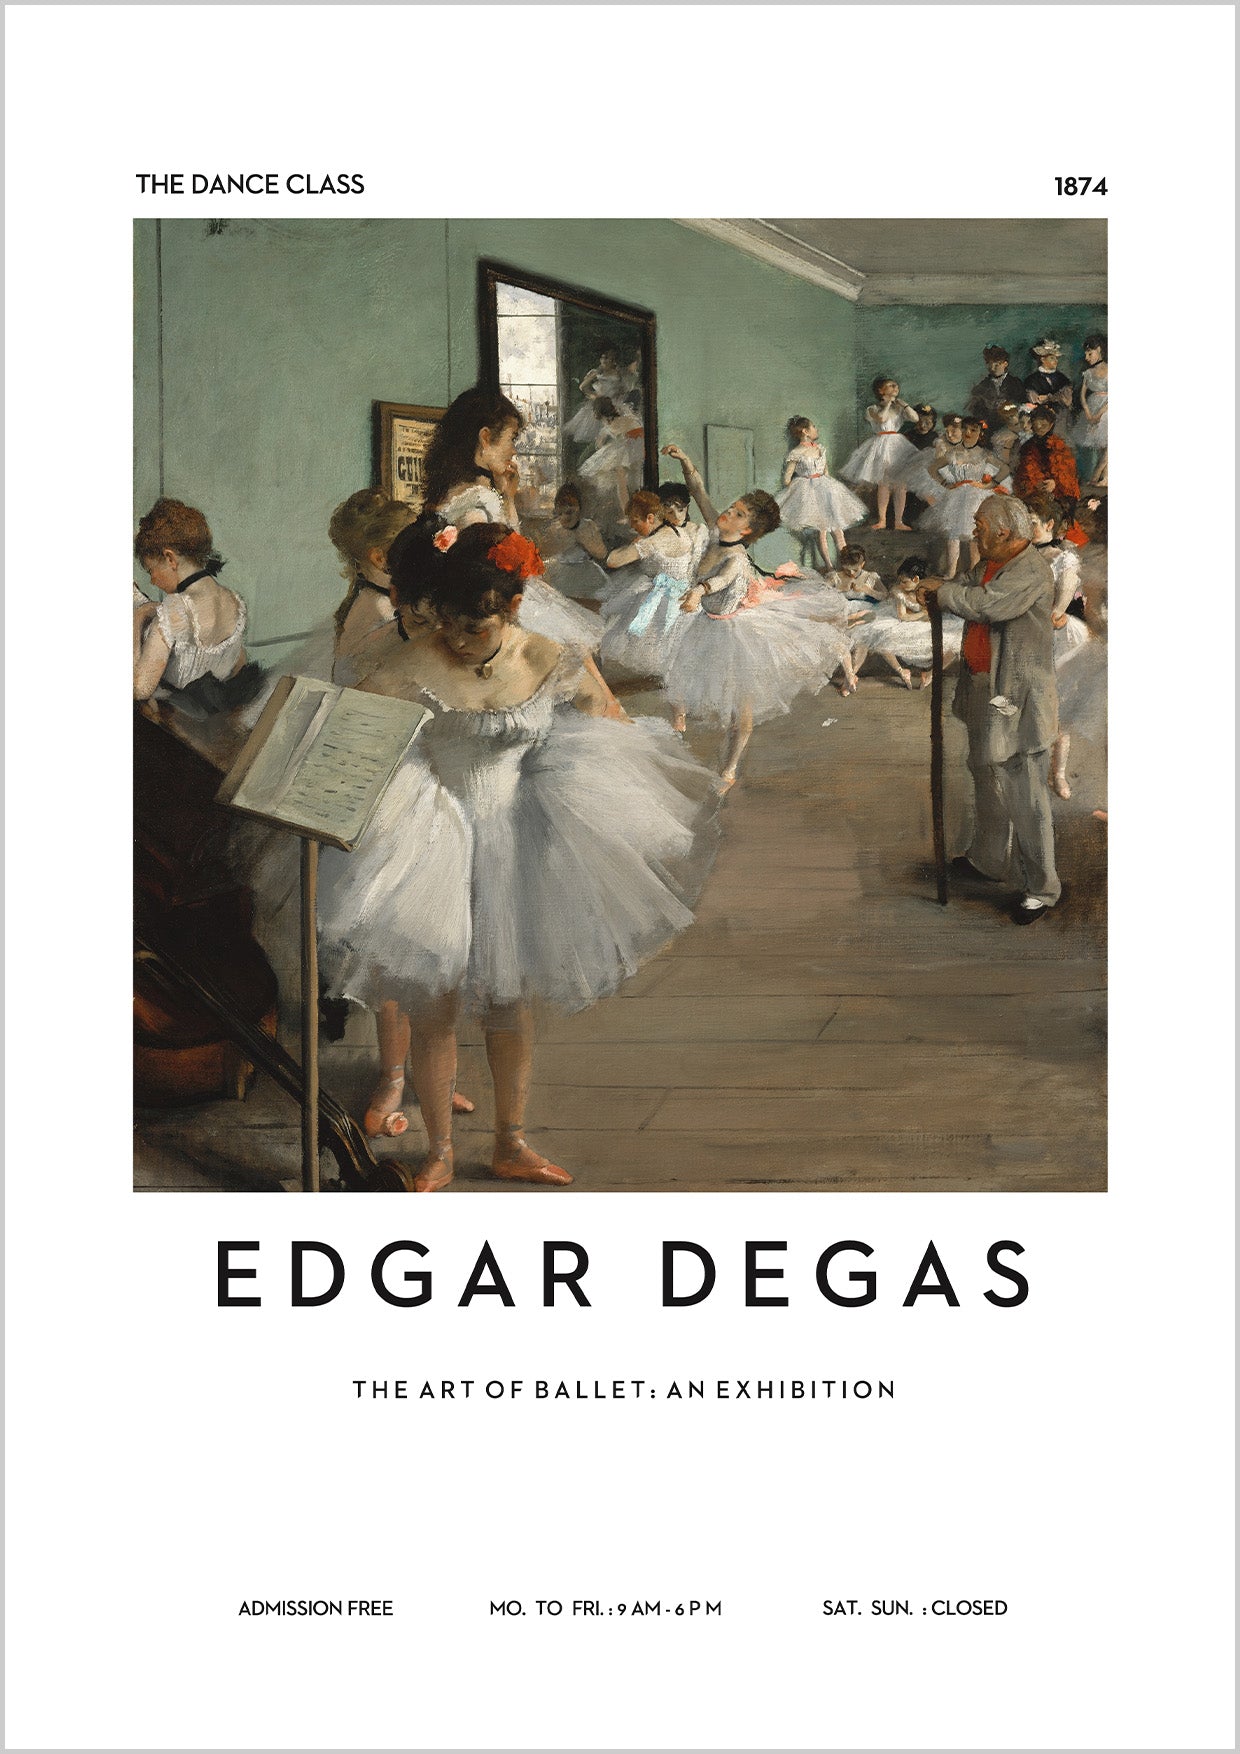 A fine artwork "The Dance Class" circa 1874 from the French artist Edgar Degas.